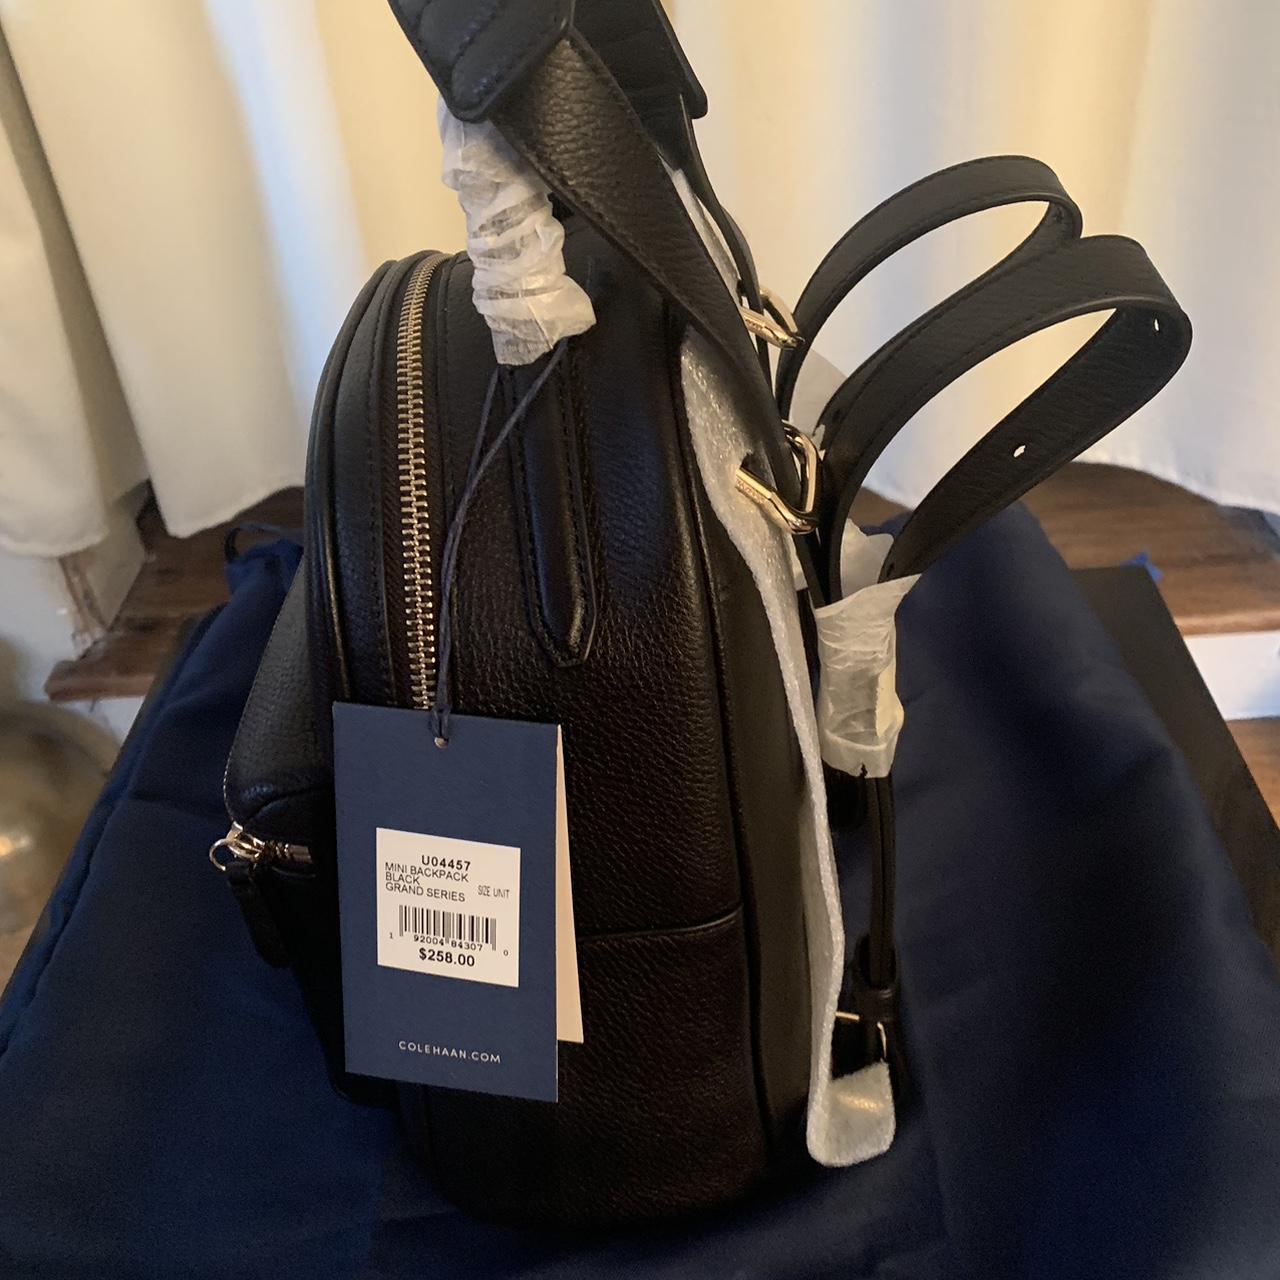 Cole Haan Mini Leather Shoulder Bag